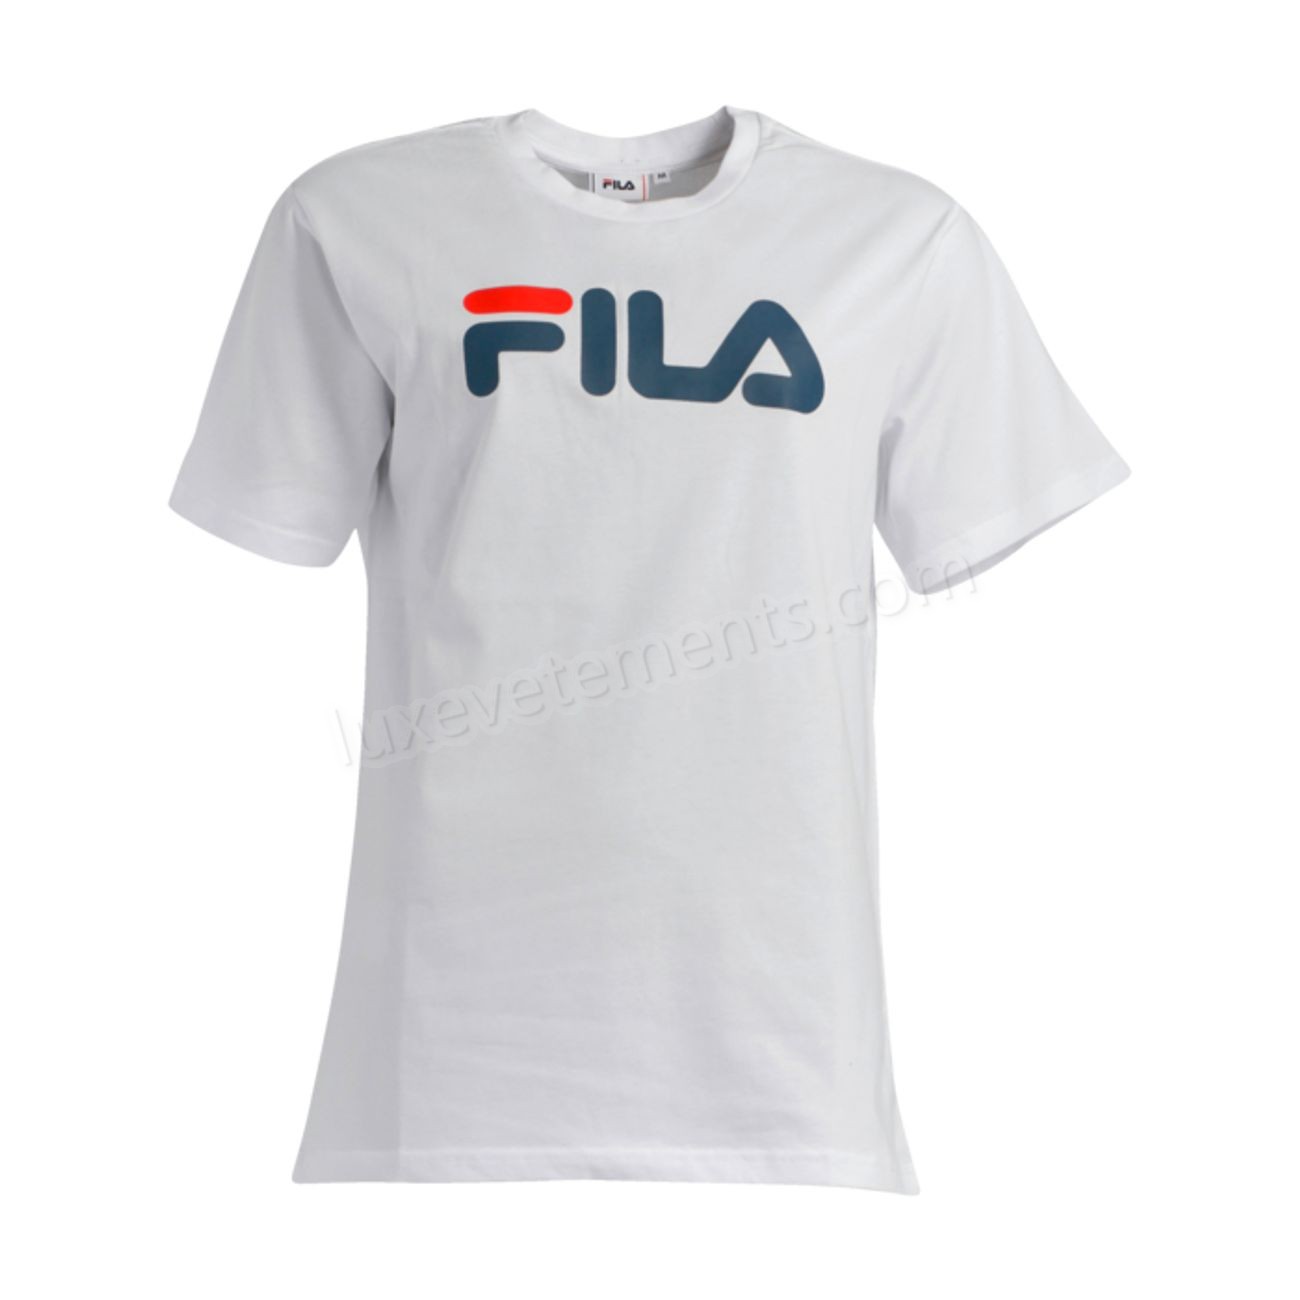 Fila-Tee Shirt MC Multisport femme FILA PURE Vente en ligne - Fila-Tee Shirt MC Multisport femme FILA PURE Vente en ligne